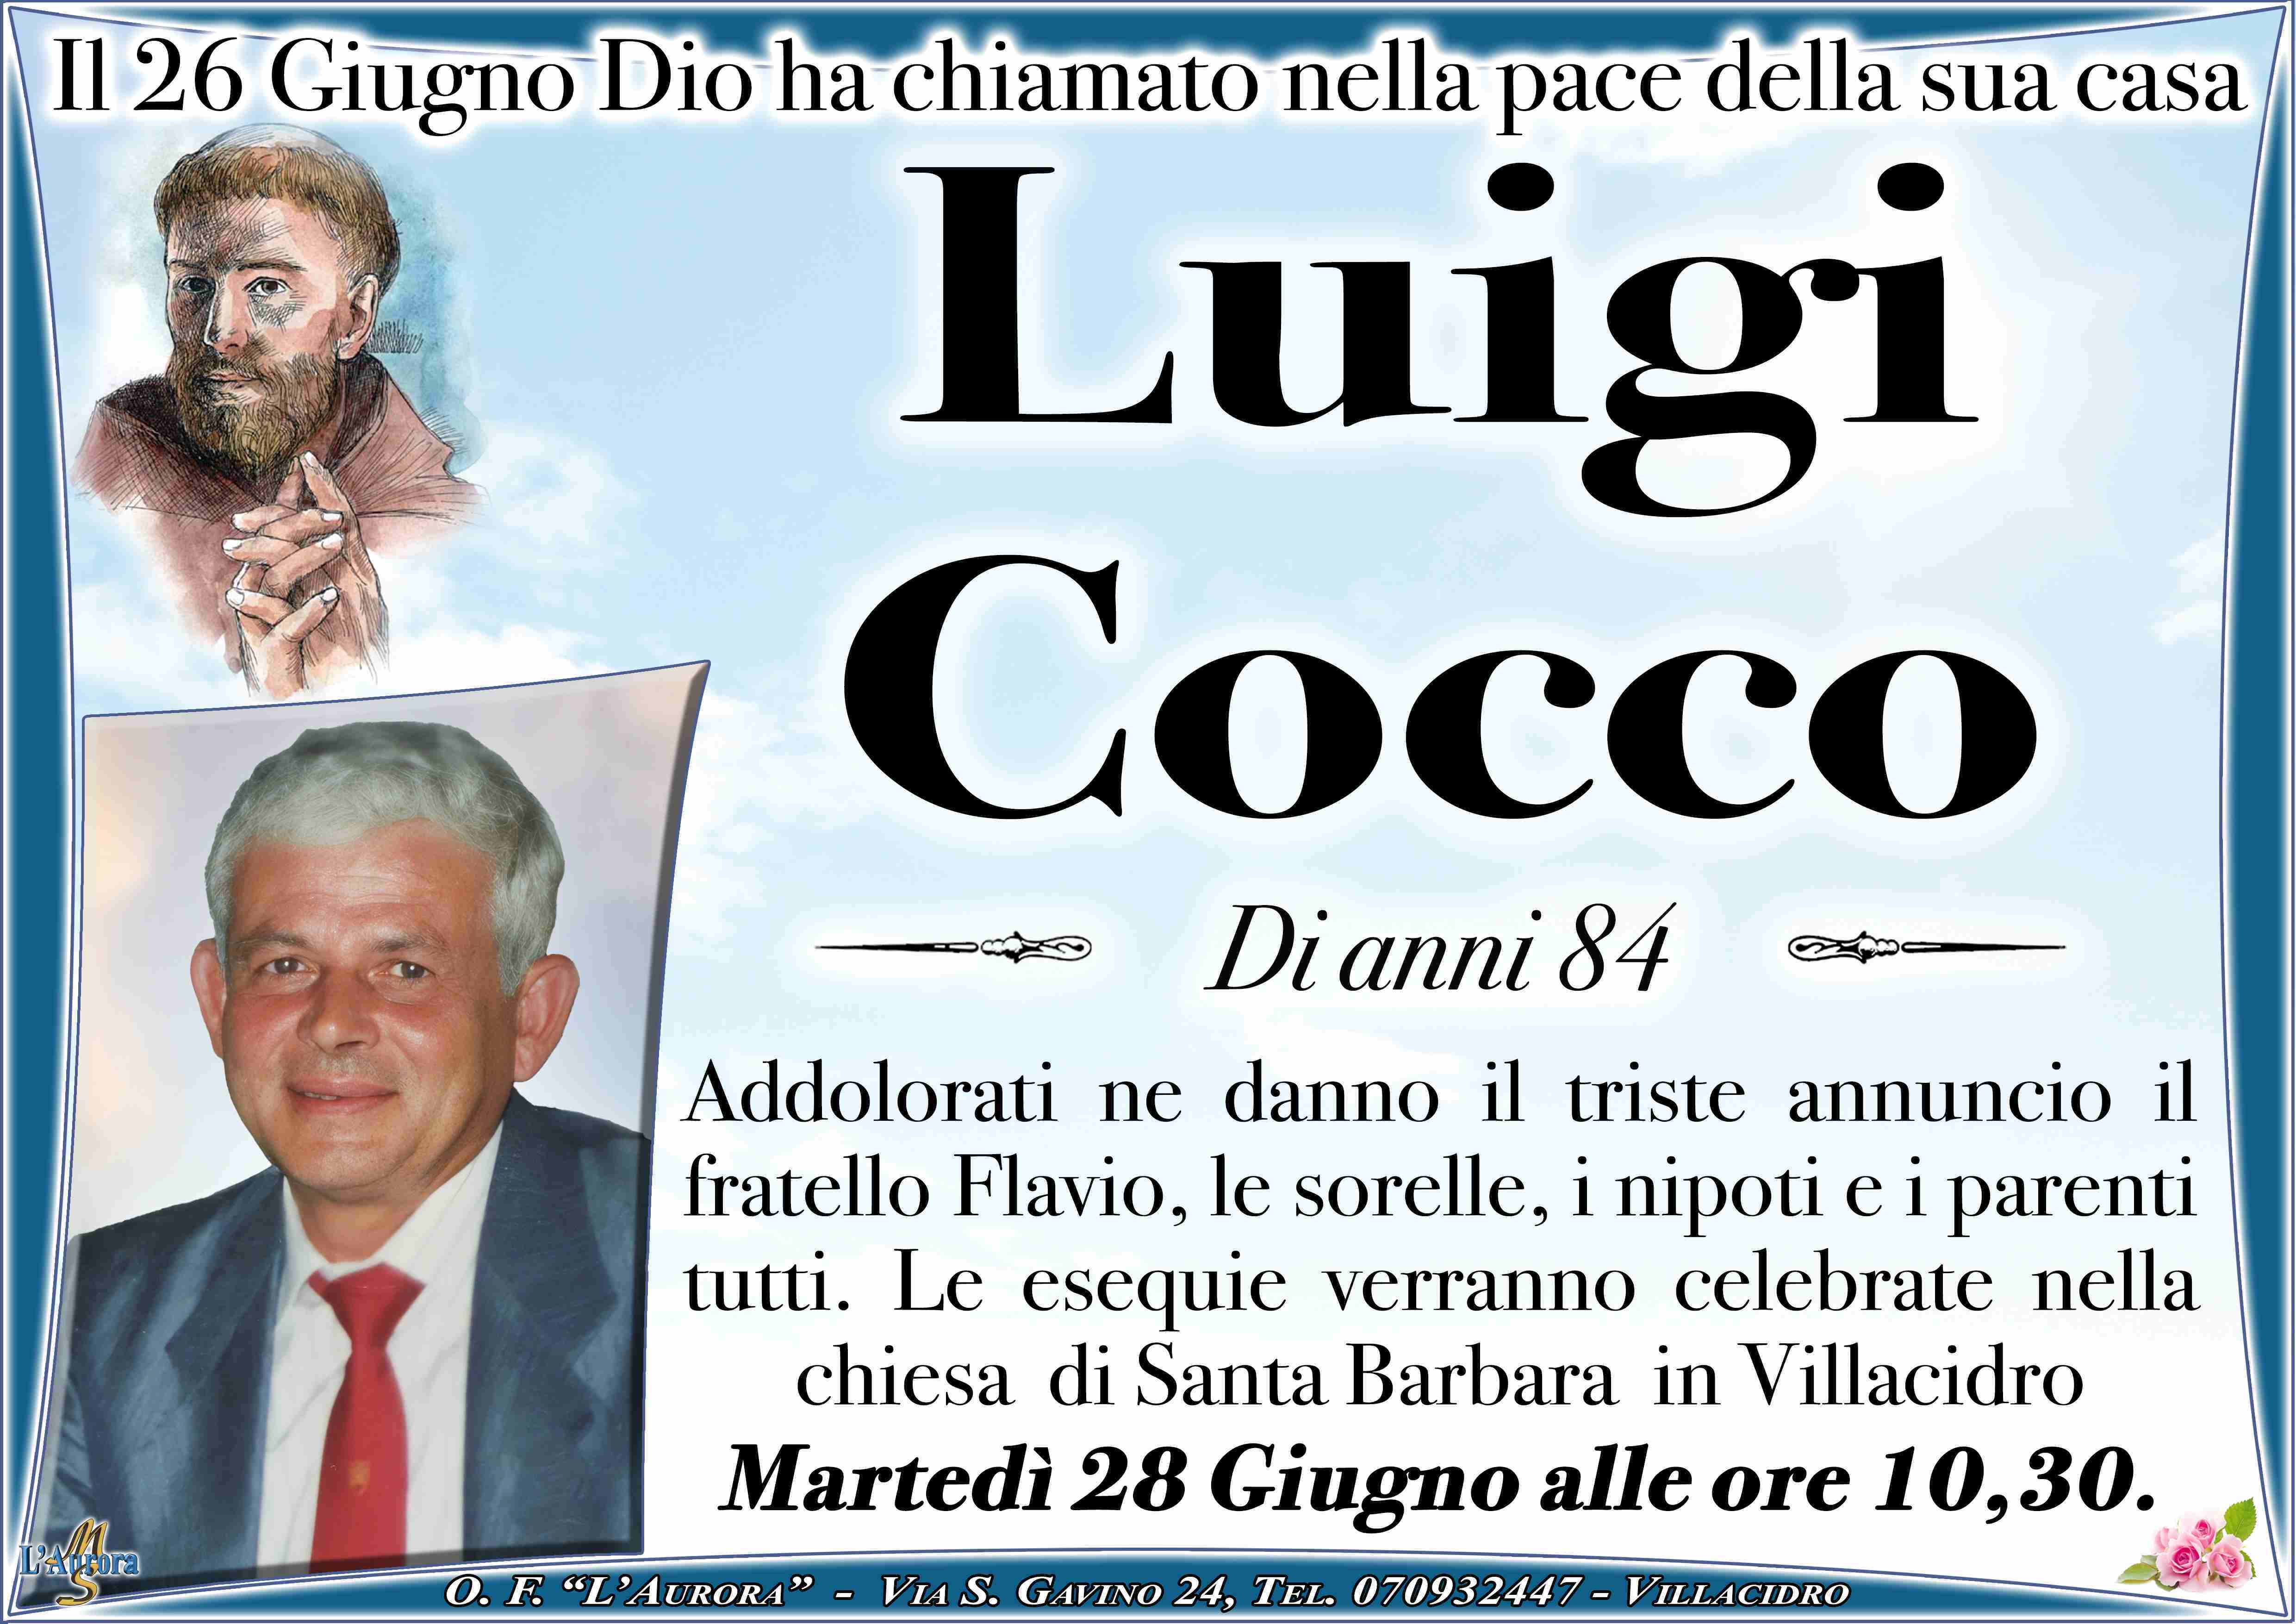 Luigi Cocco